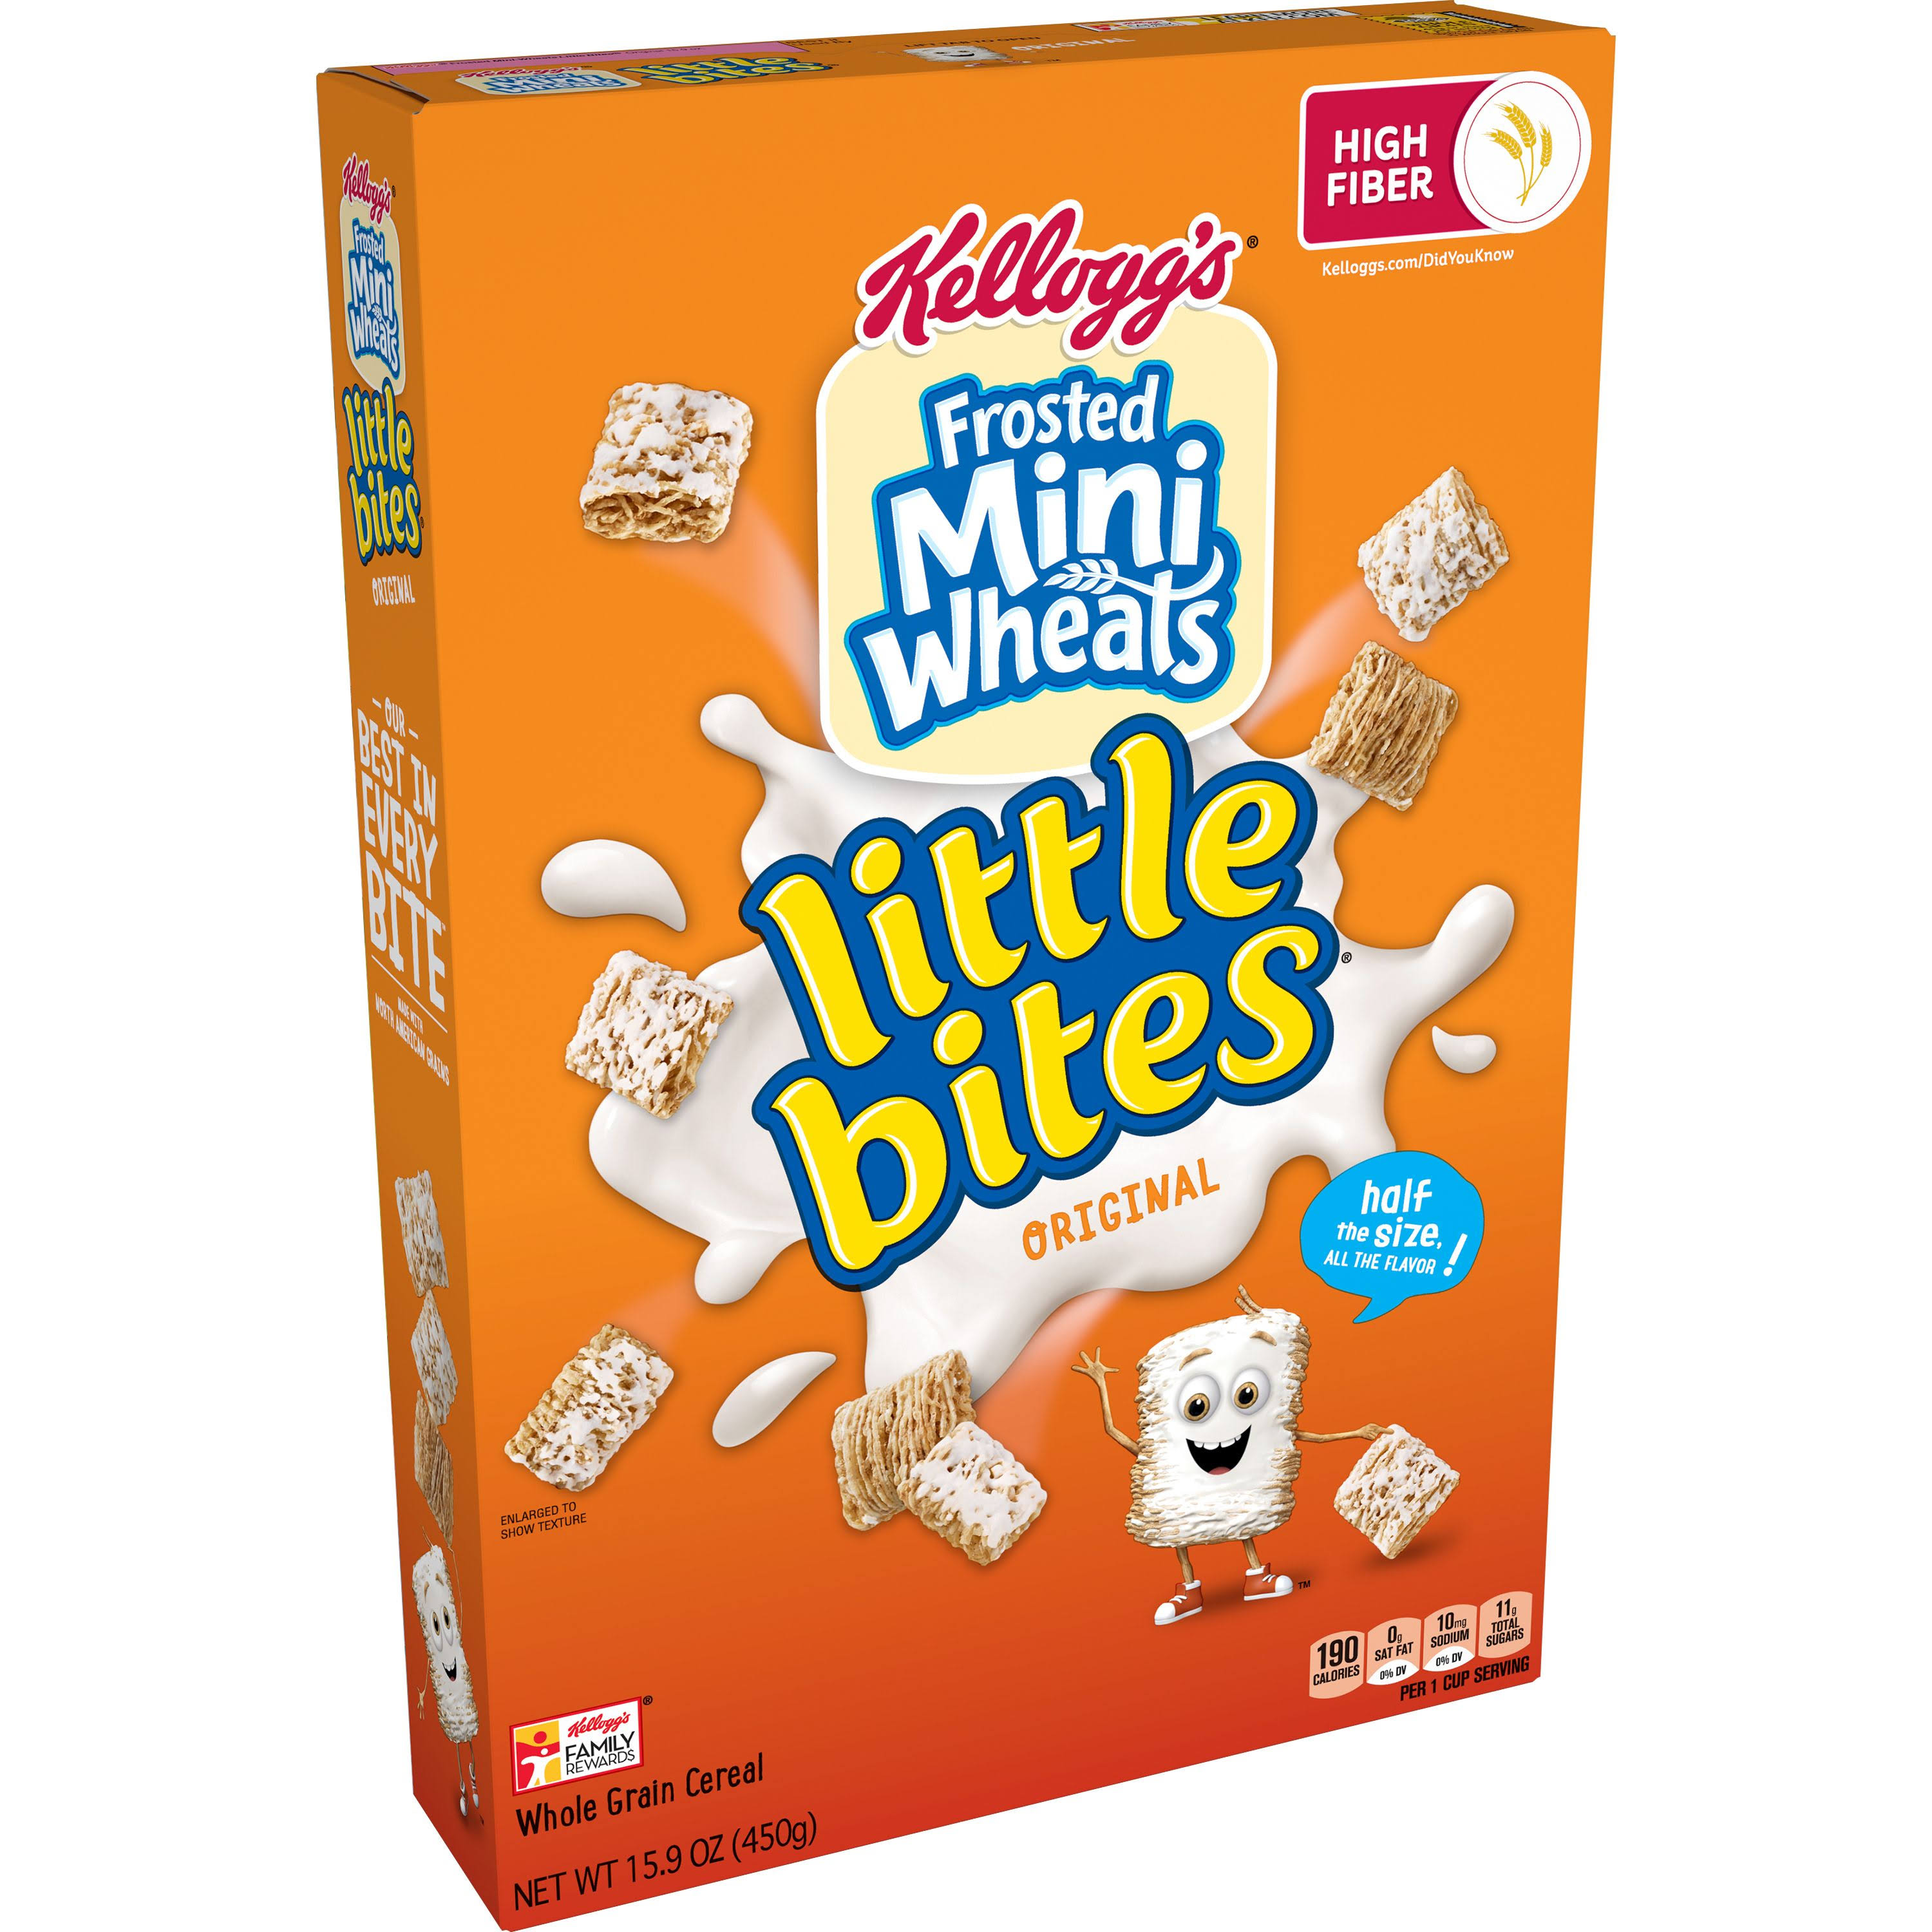 Frosted Mini Wheats Little Bites Whole Grain Cereal, Original - 15.9 oz